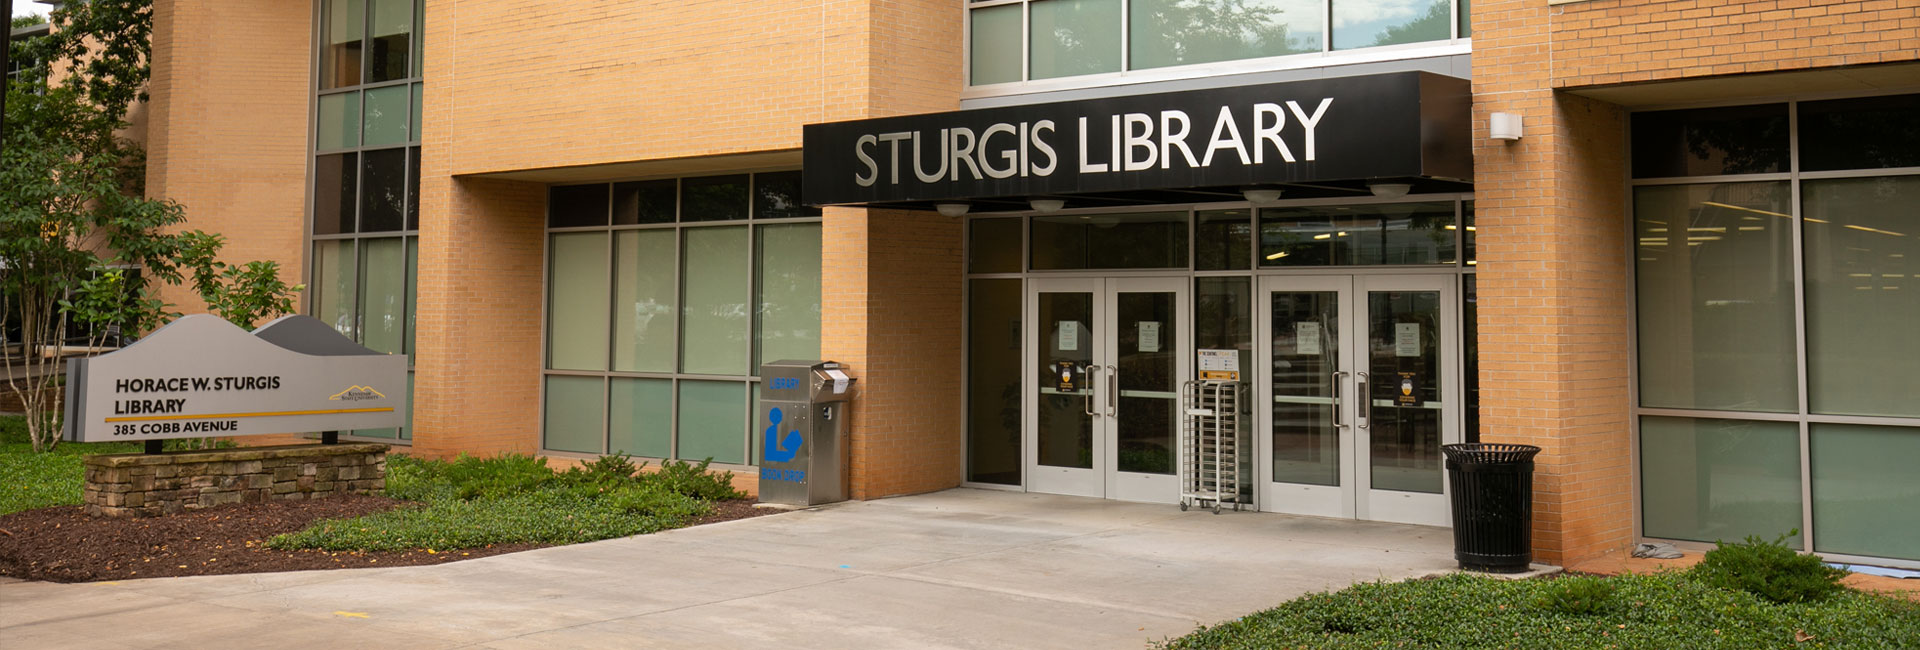 Sturgis library building exterior entrance